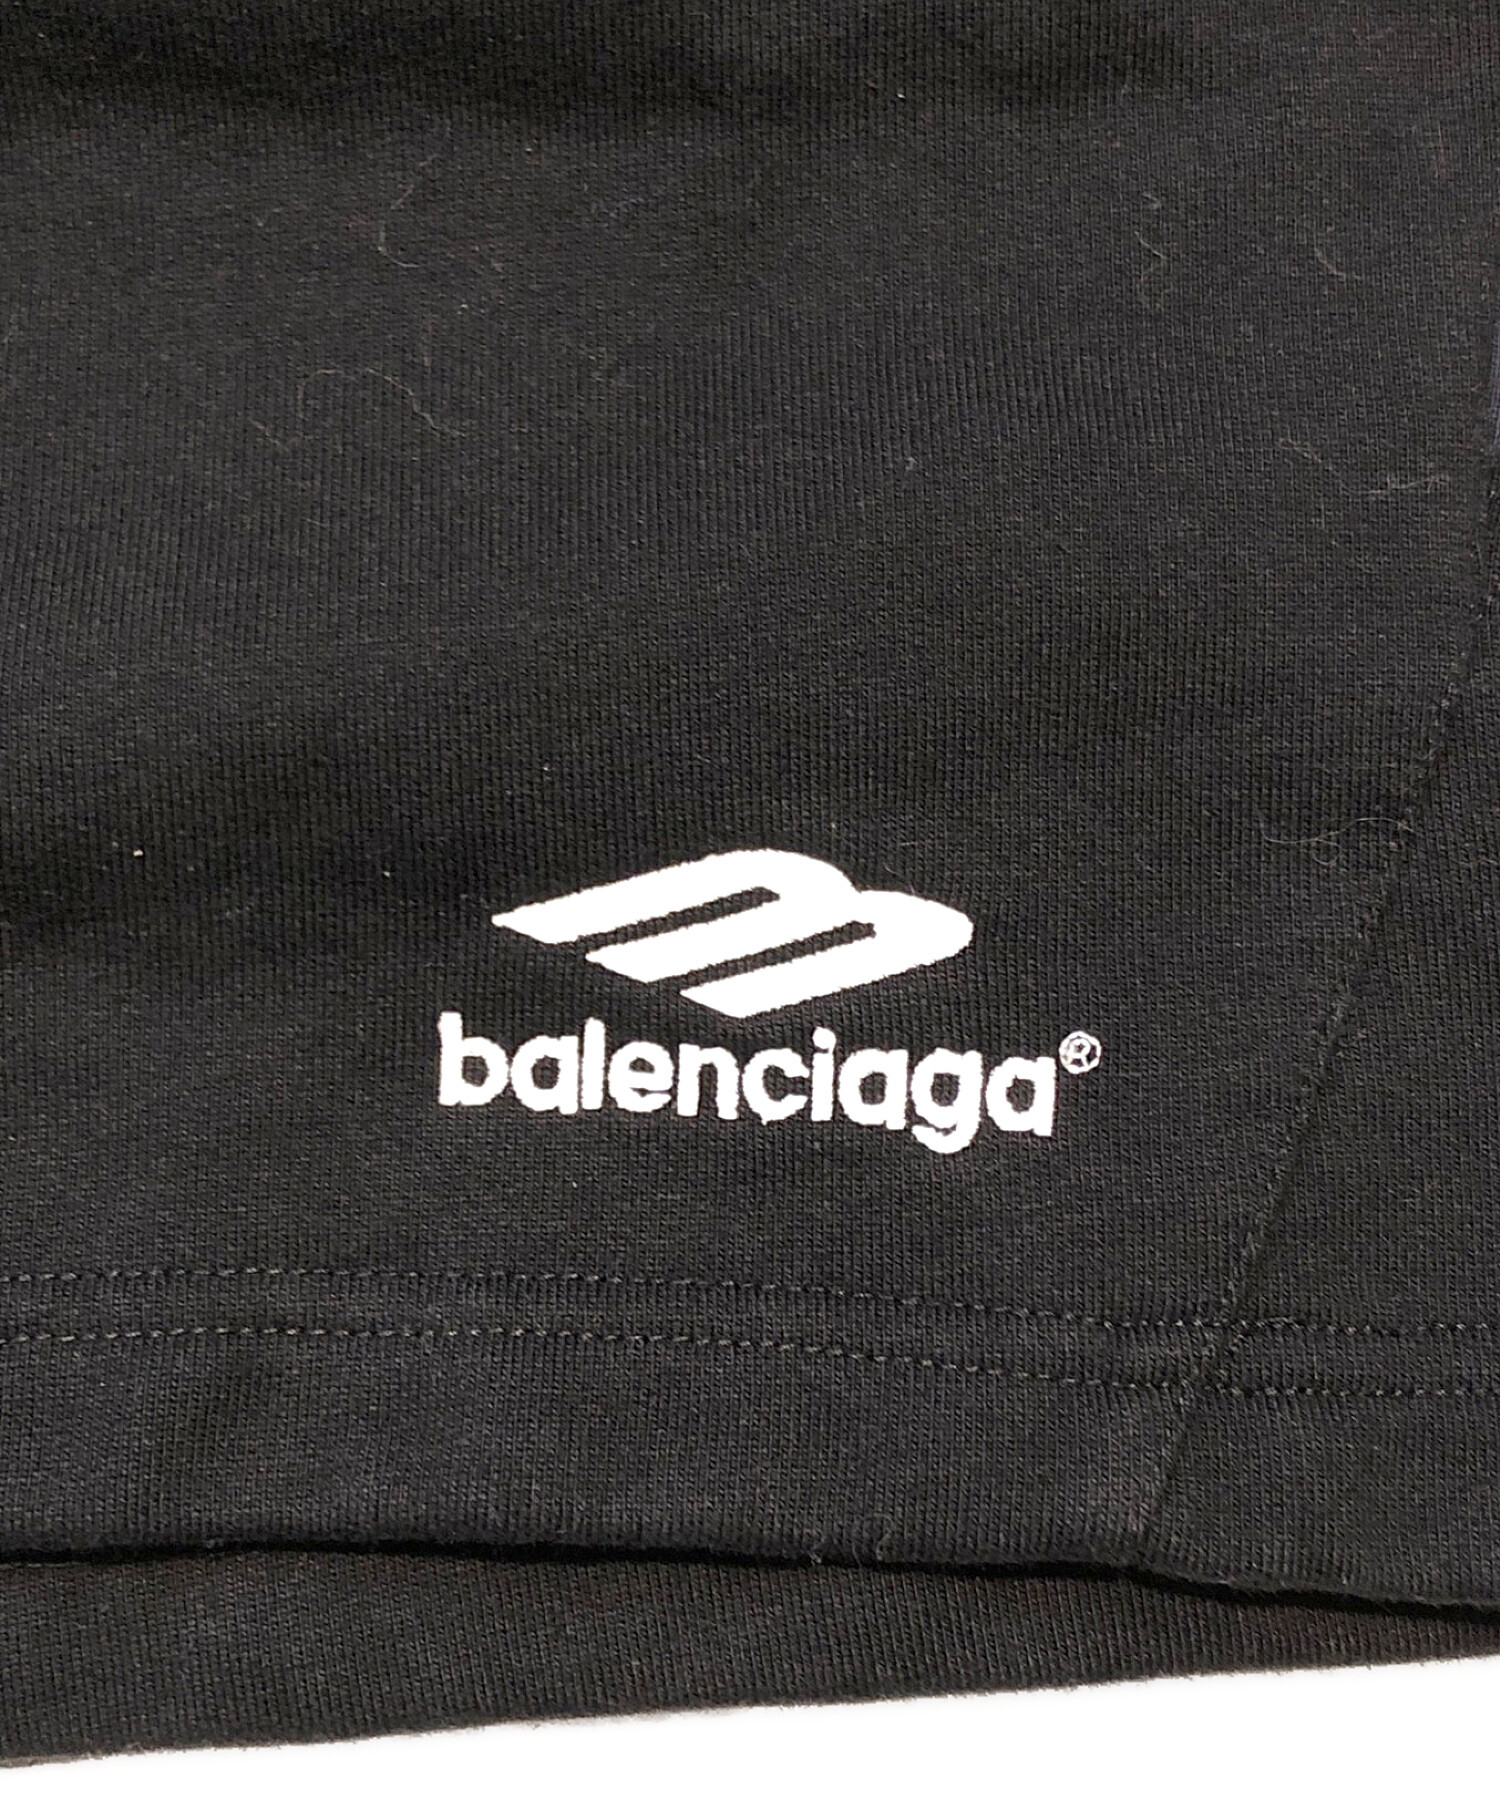 BALENCIAGA (バレンシアガ) トラックスーツスウェットハーフパンツ ブラック サイズ:SIZE S